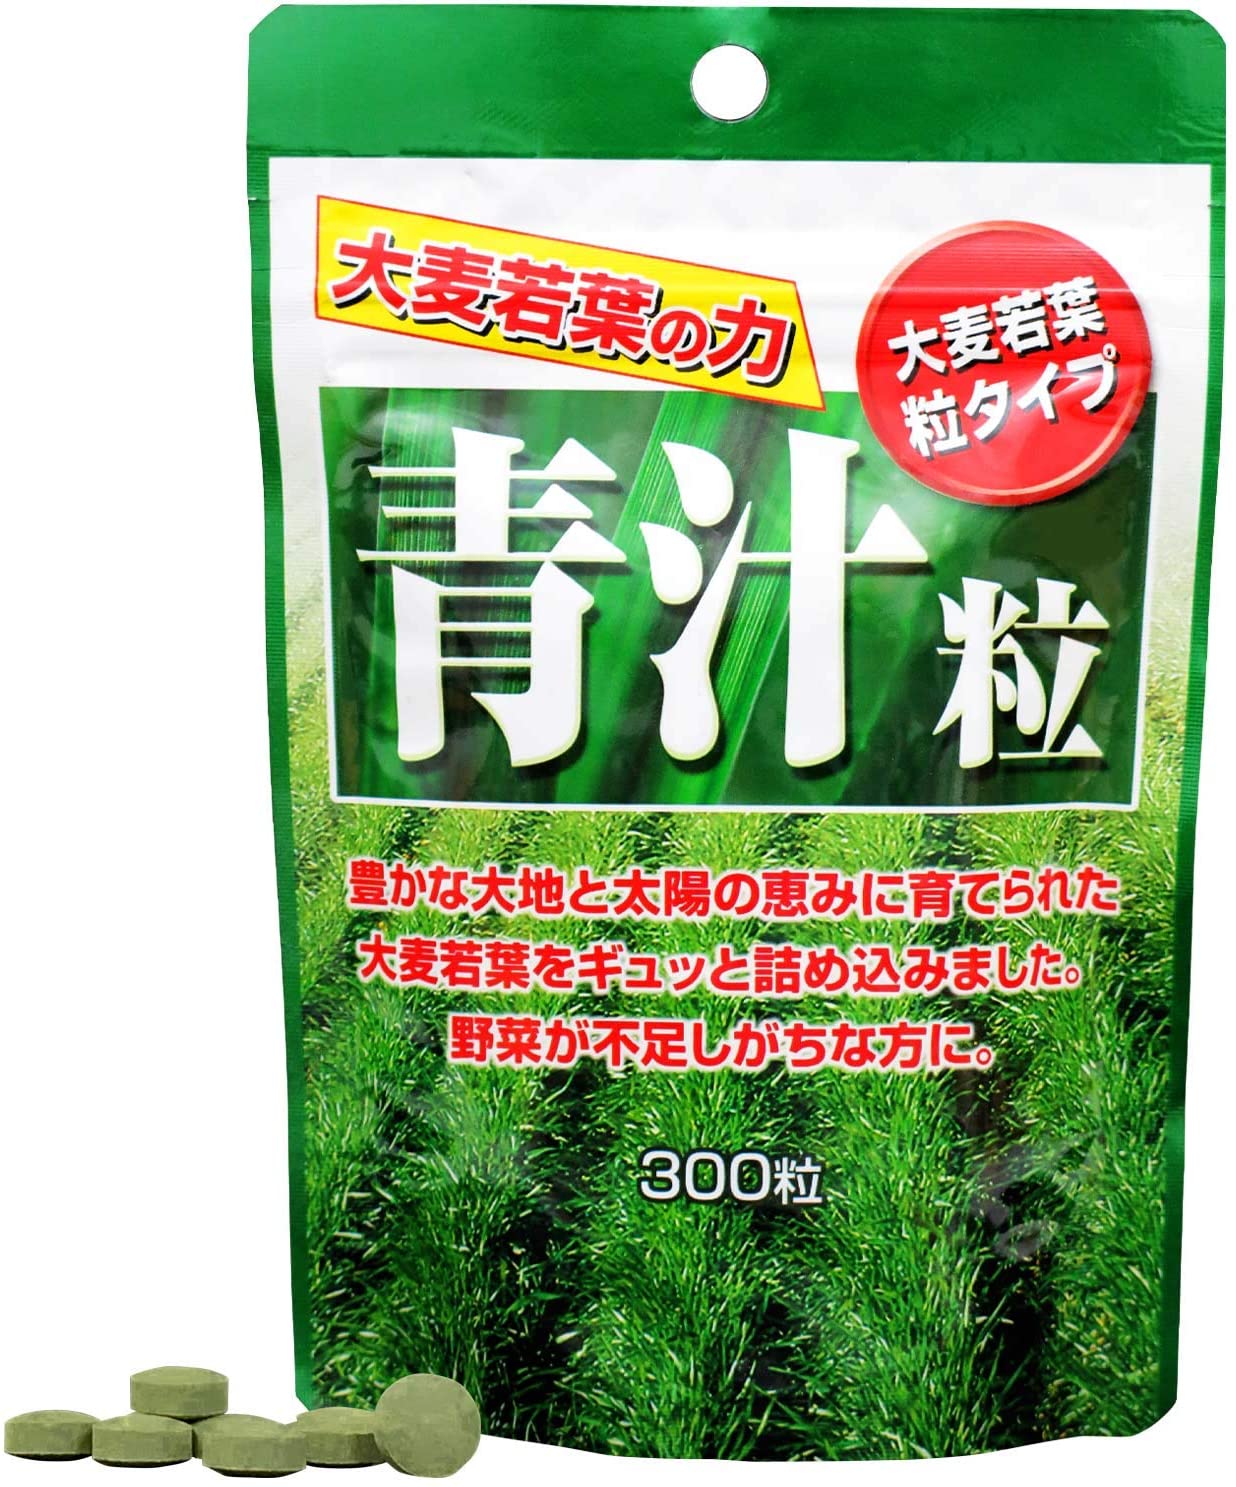 Комплекс с молодыми листьями ячменя Yuki Standpack Green Blue Seeds, 300 шт